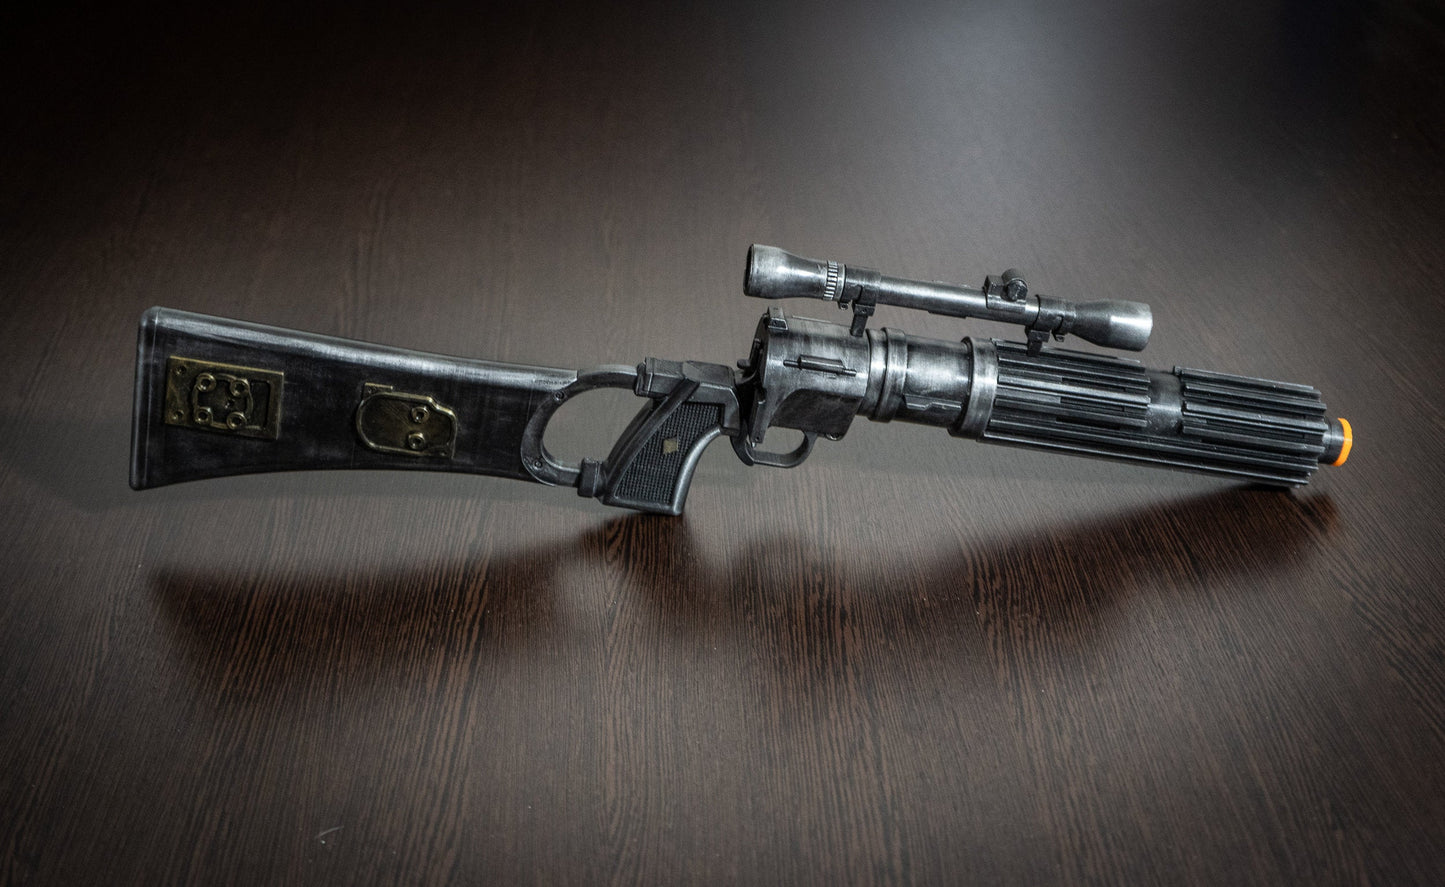 EE-3 Boba Fett blaster from Star Wars | Cosplay Prop Replica blaster - 3DPrintProps